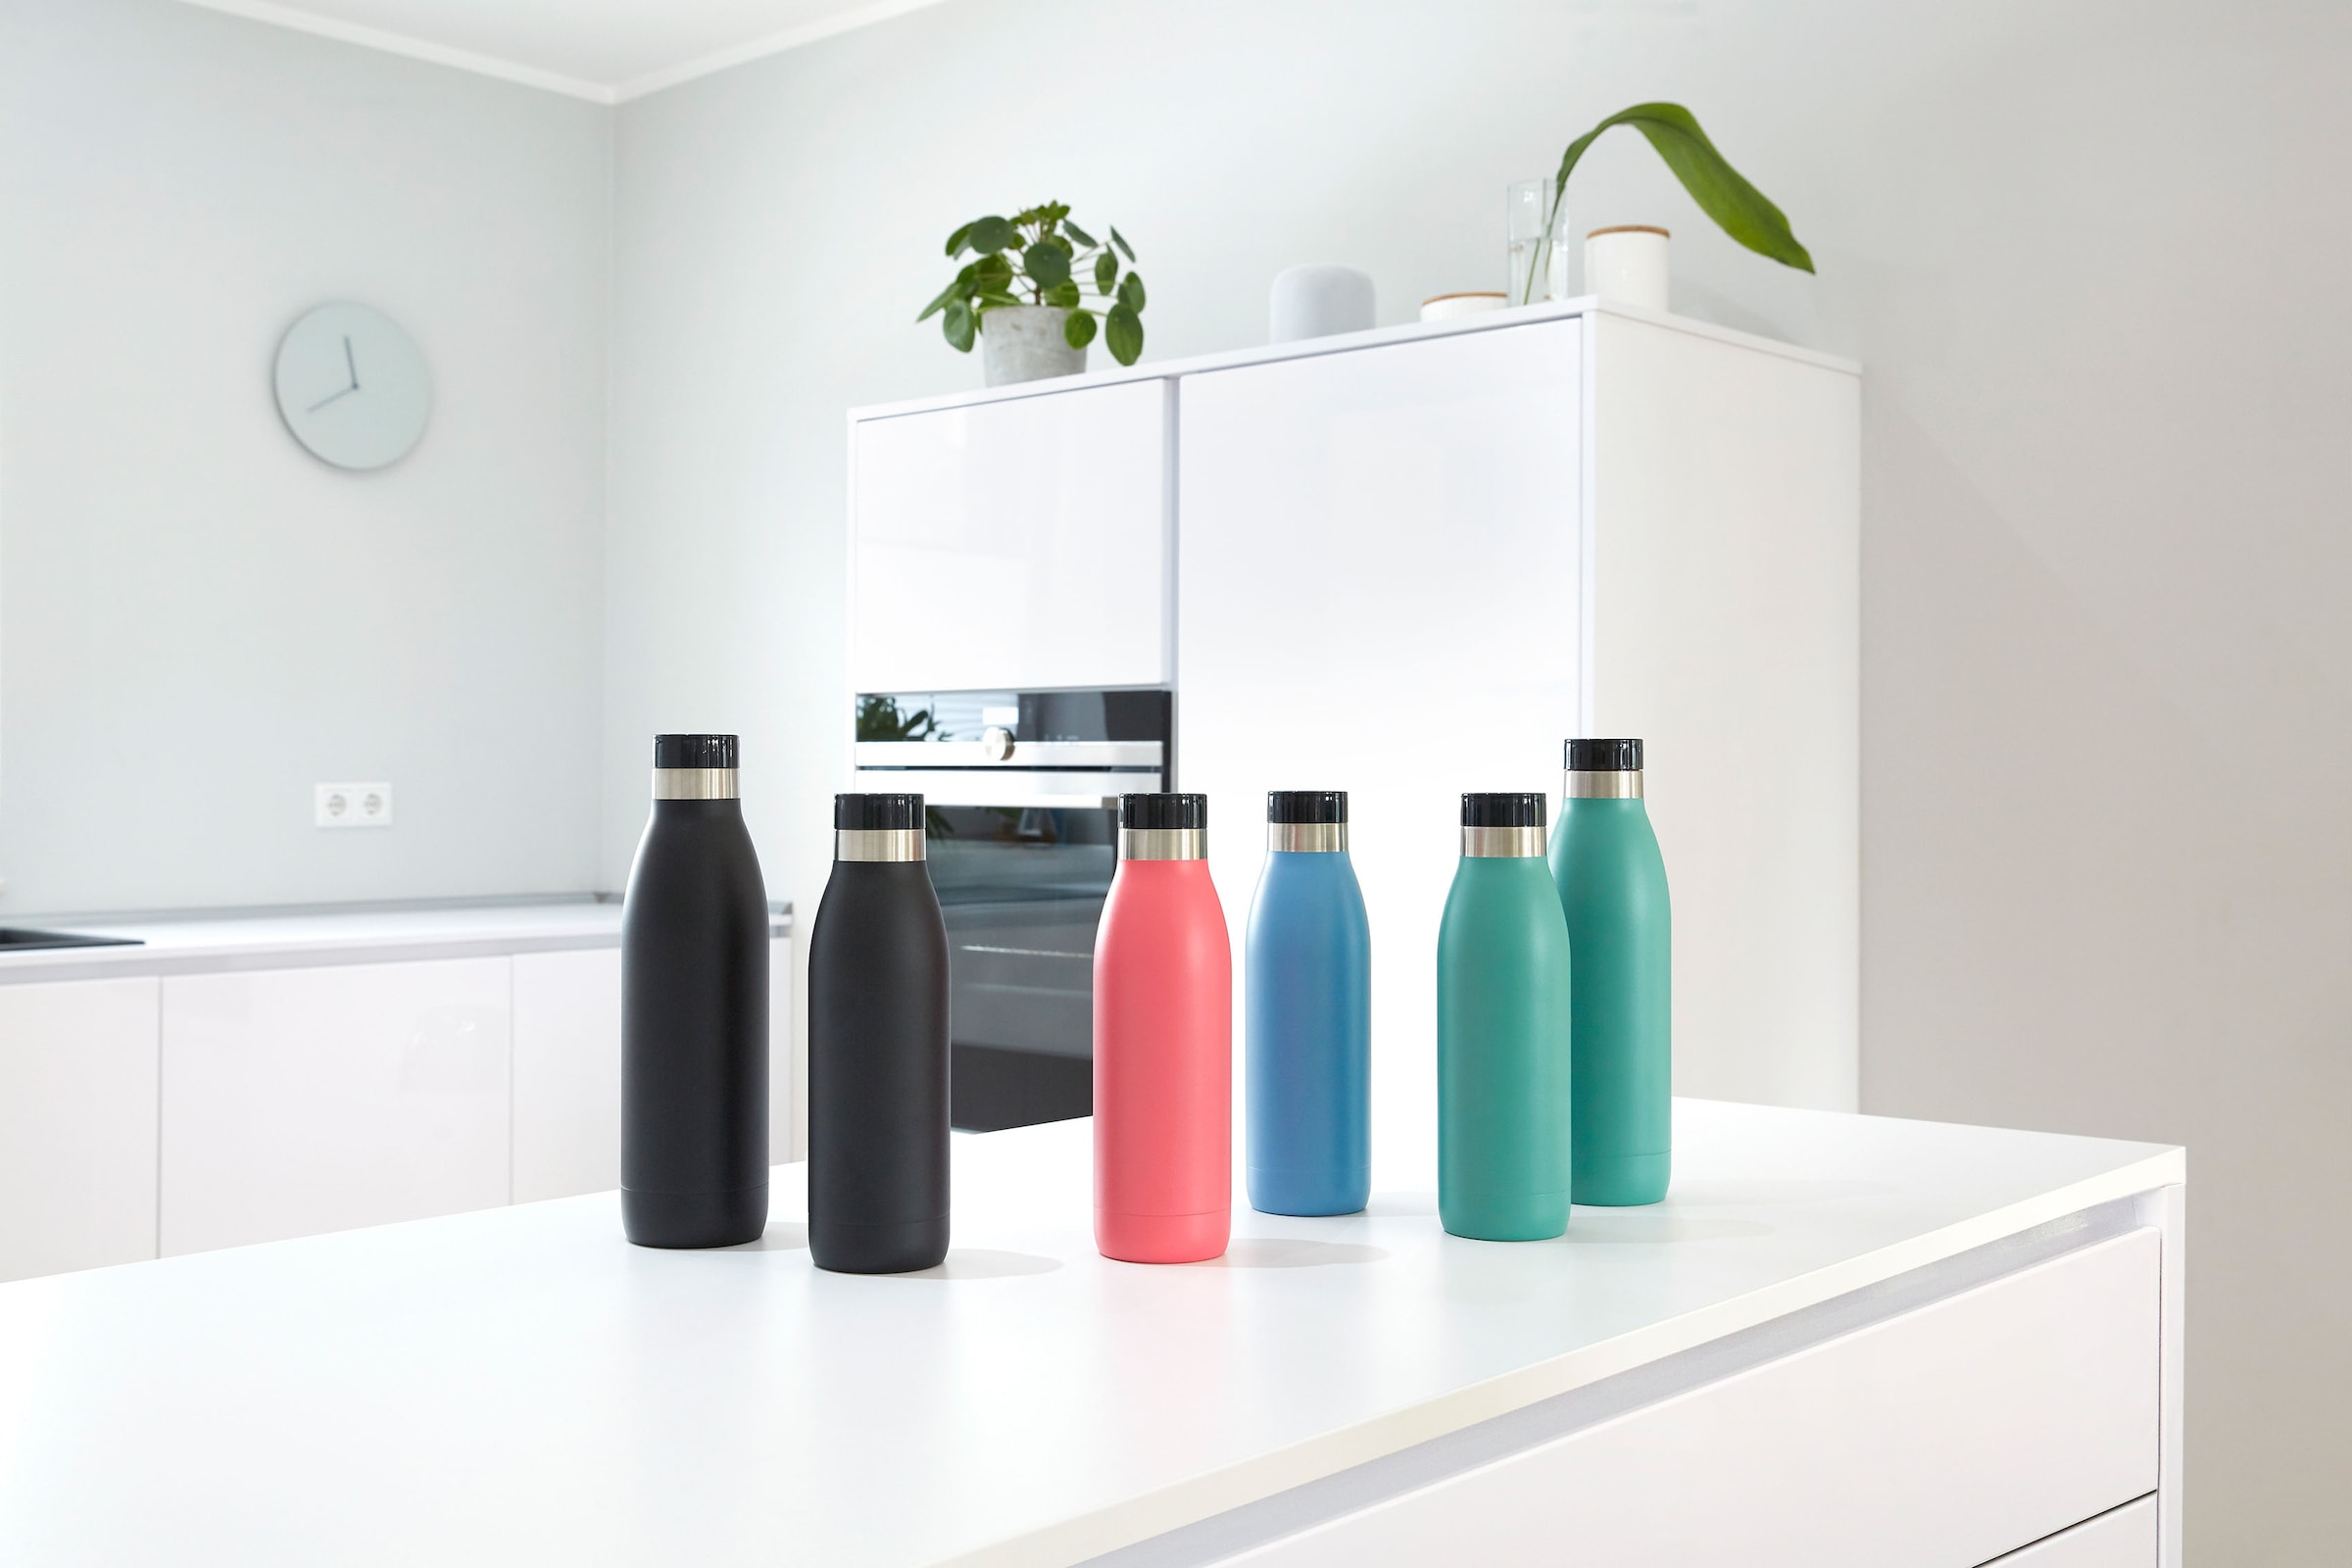 Emsa Trinkflasche »Bludrop Color«, (1 tlg.), Edelstahl, Quick-Press Deckel, 12h warm/24h kühl, spülmaschinenfest